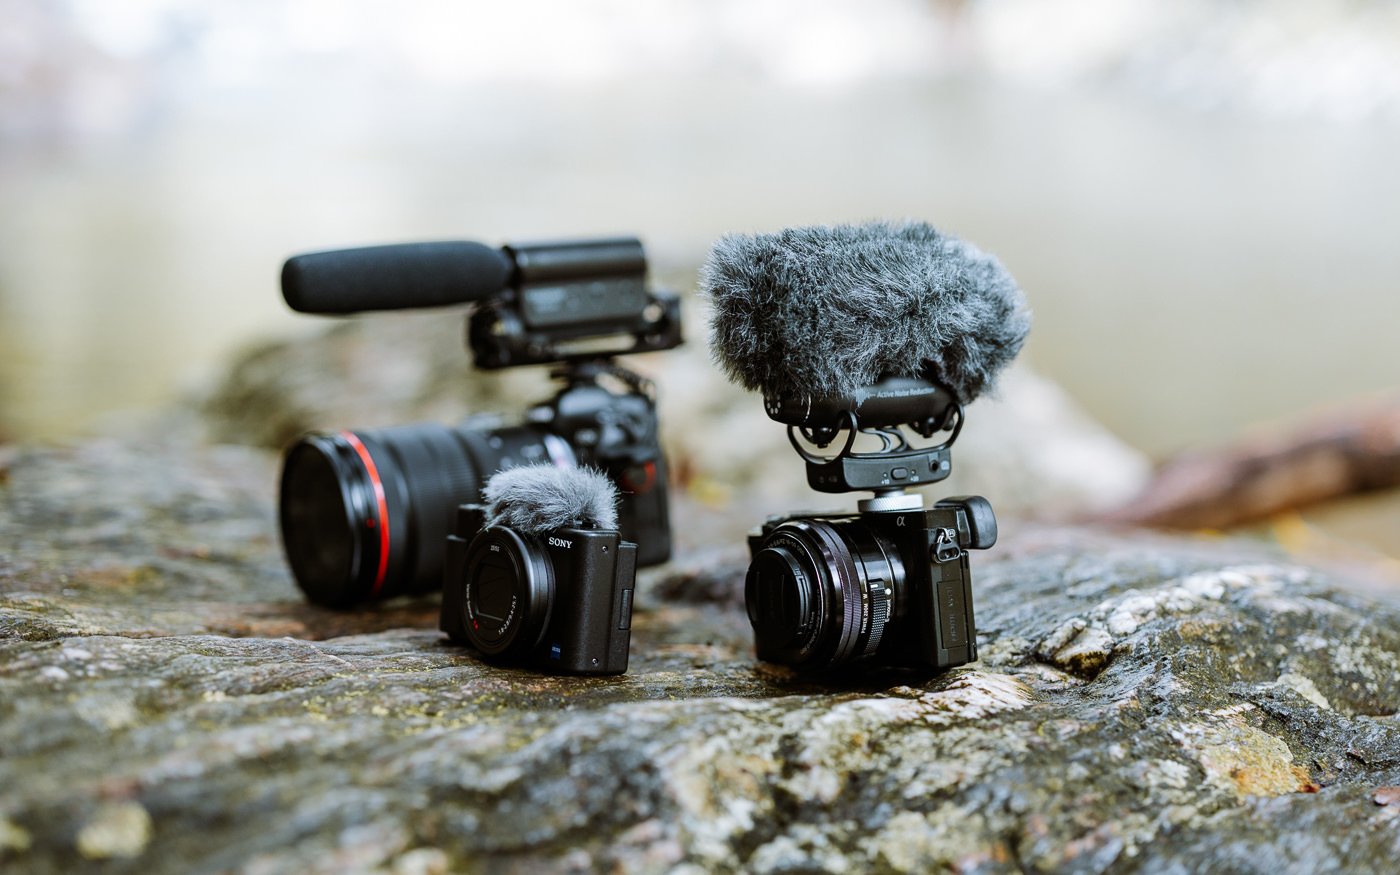 Cameras with shotgun microphones